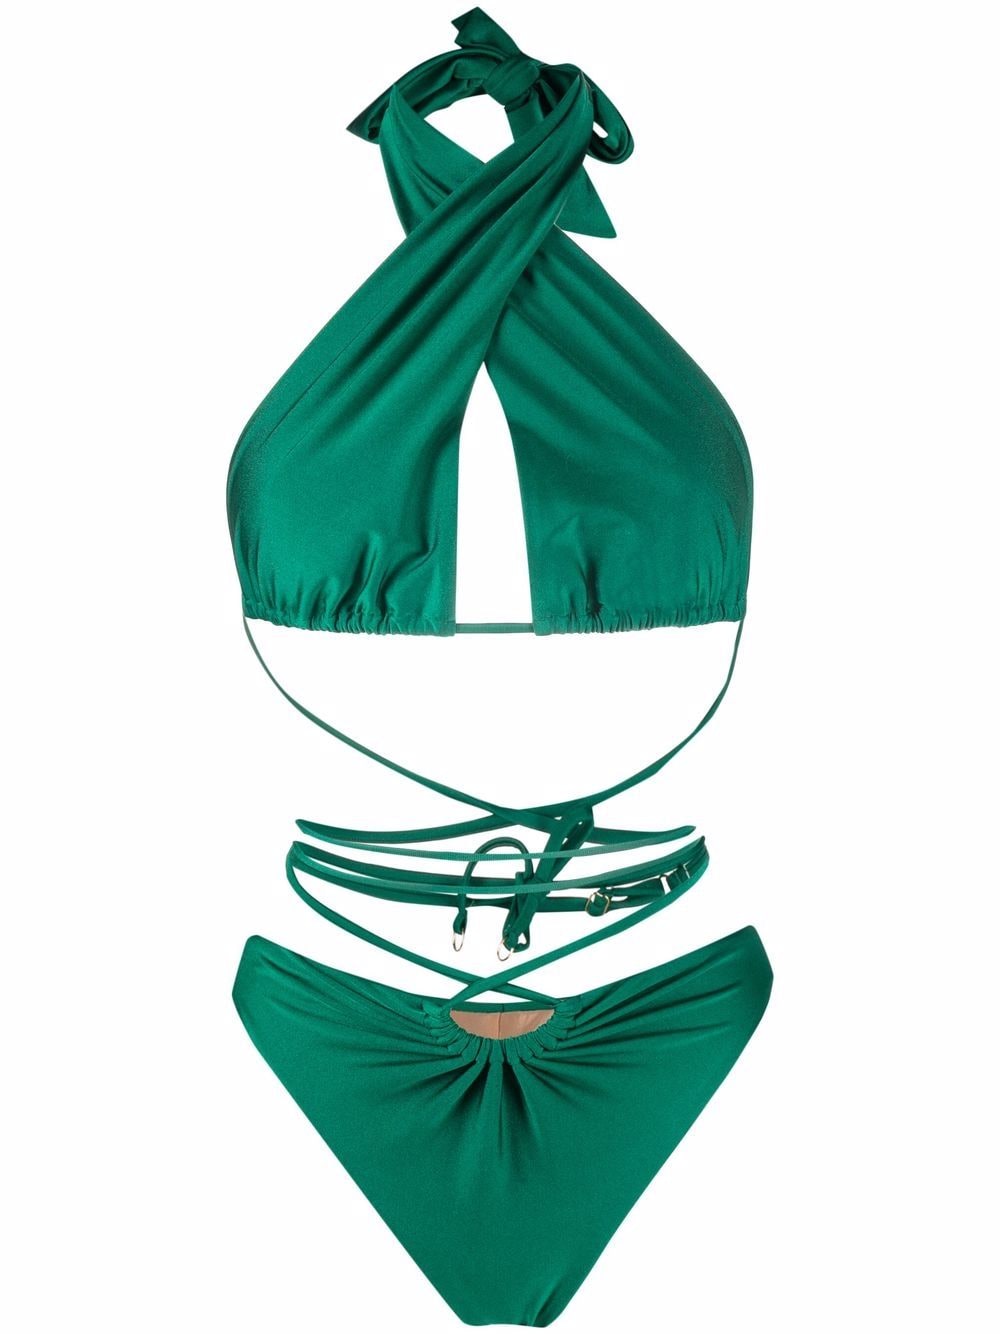 фото Noire swimwear купальник с вырезом халтер